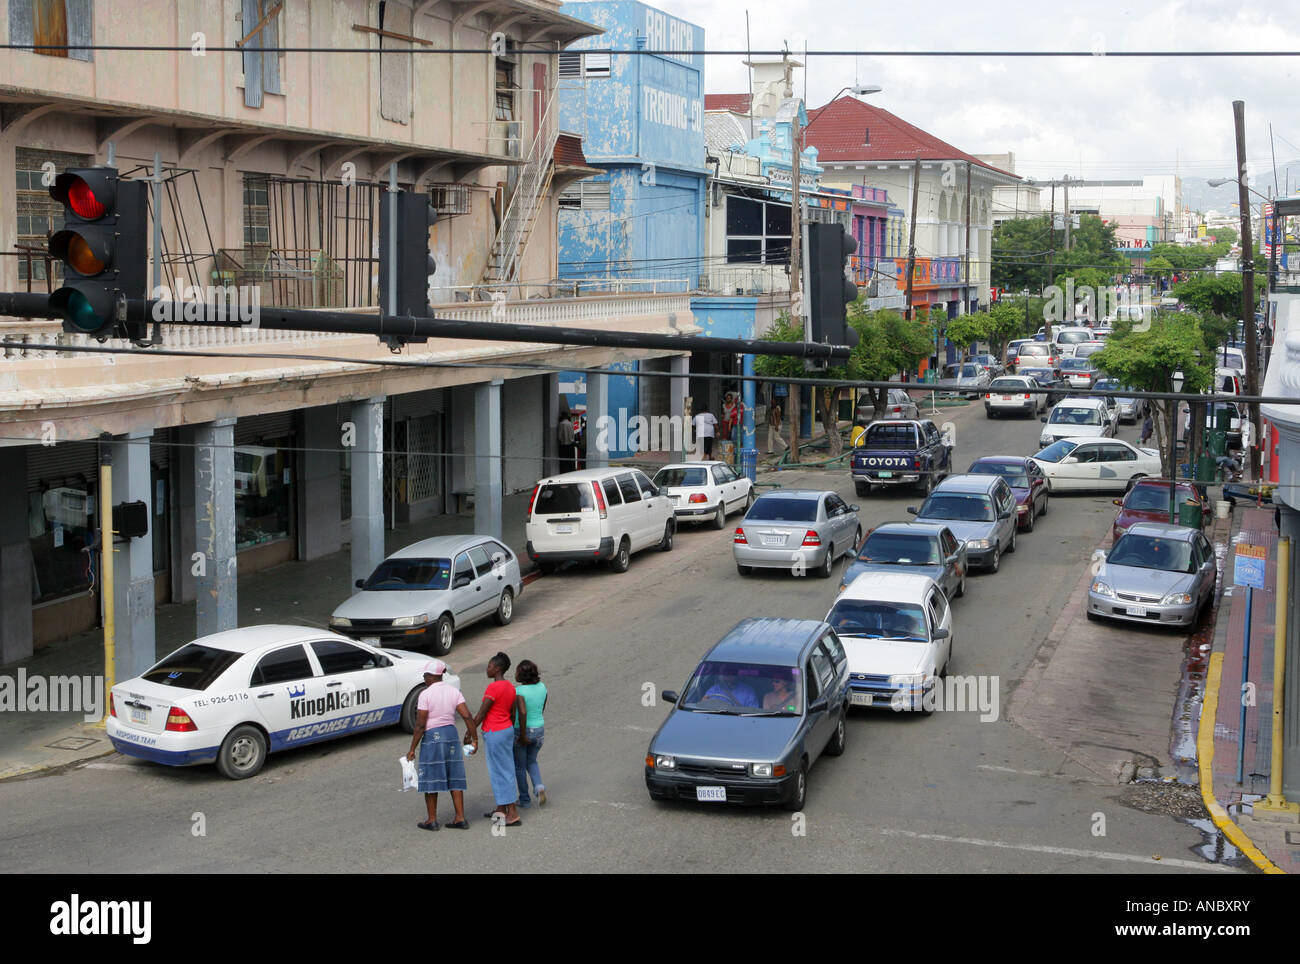 King Street, Kingston, Jamaica Stock Photo - Alamy